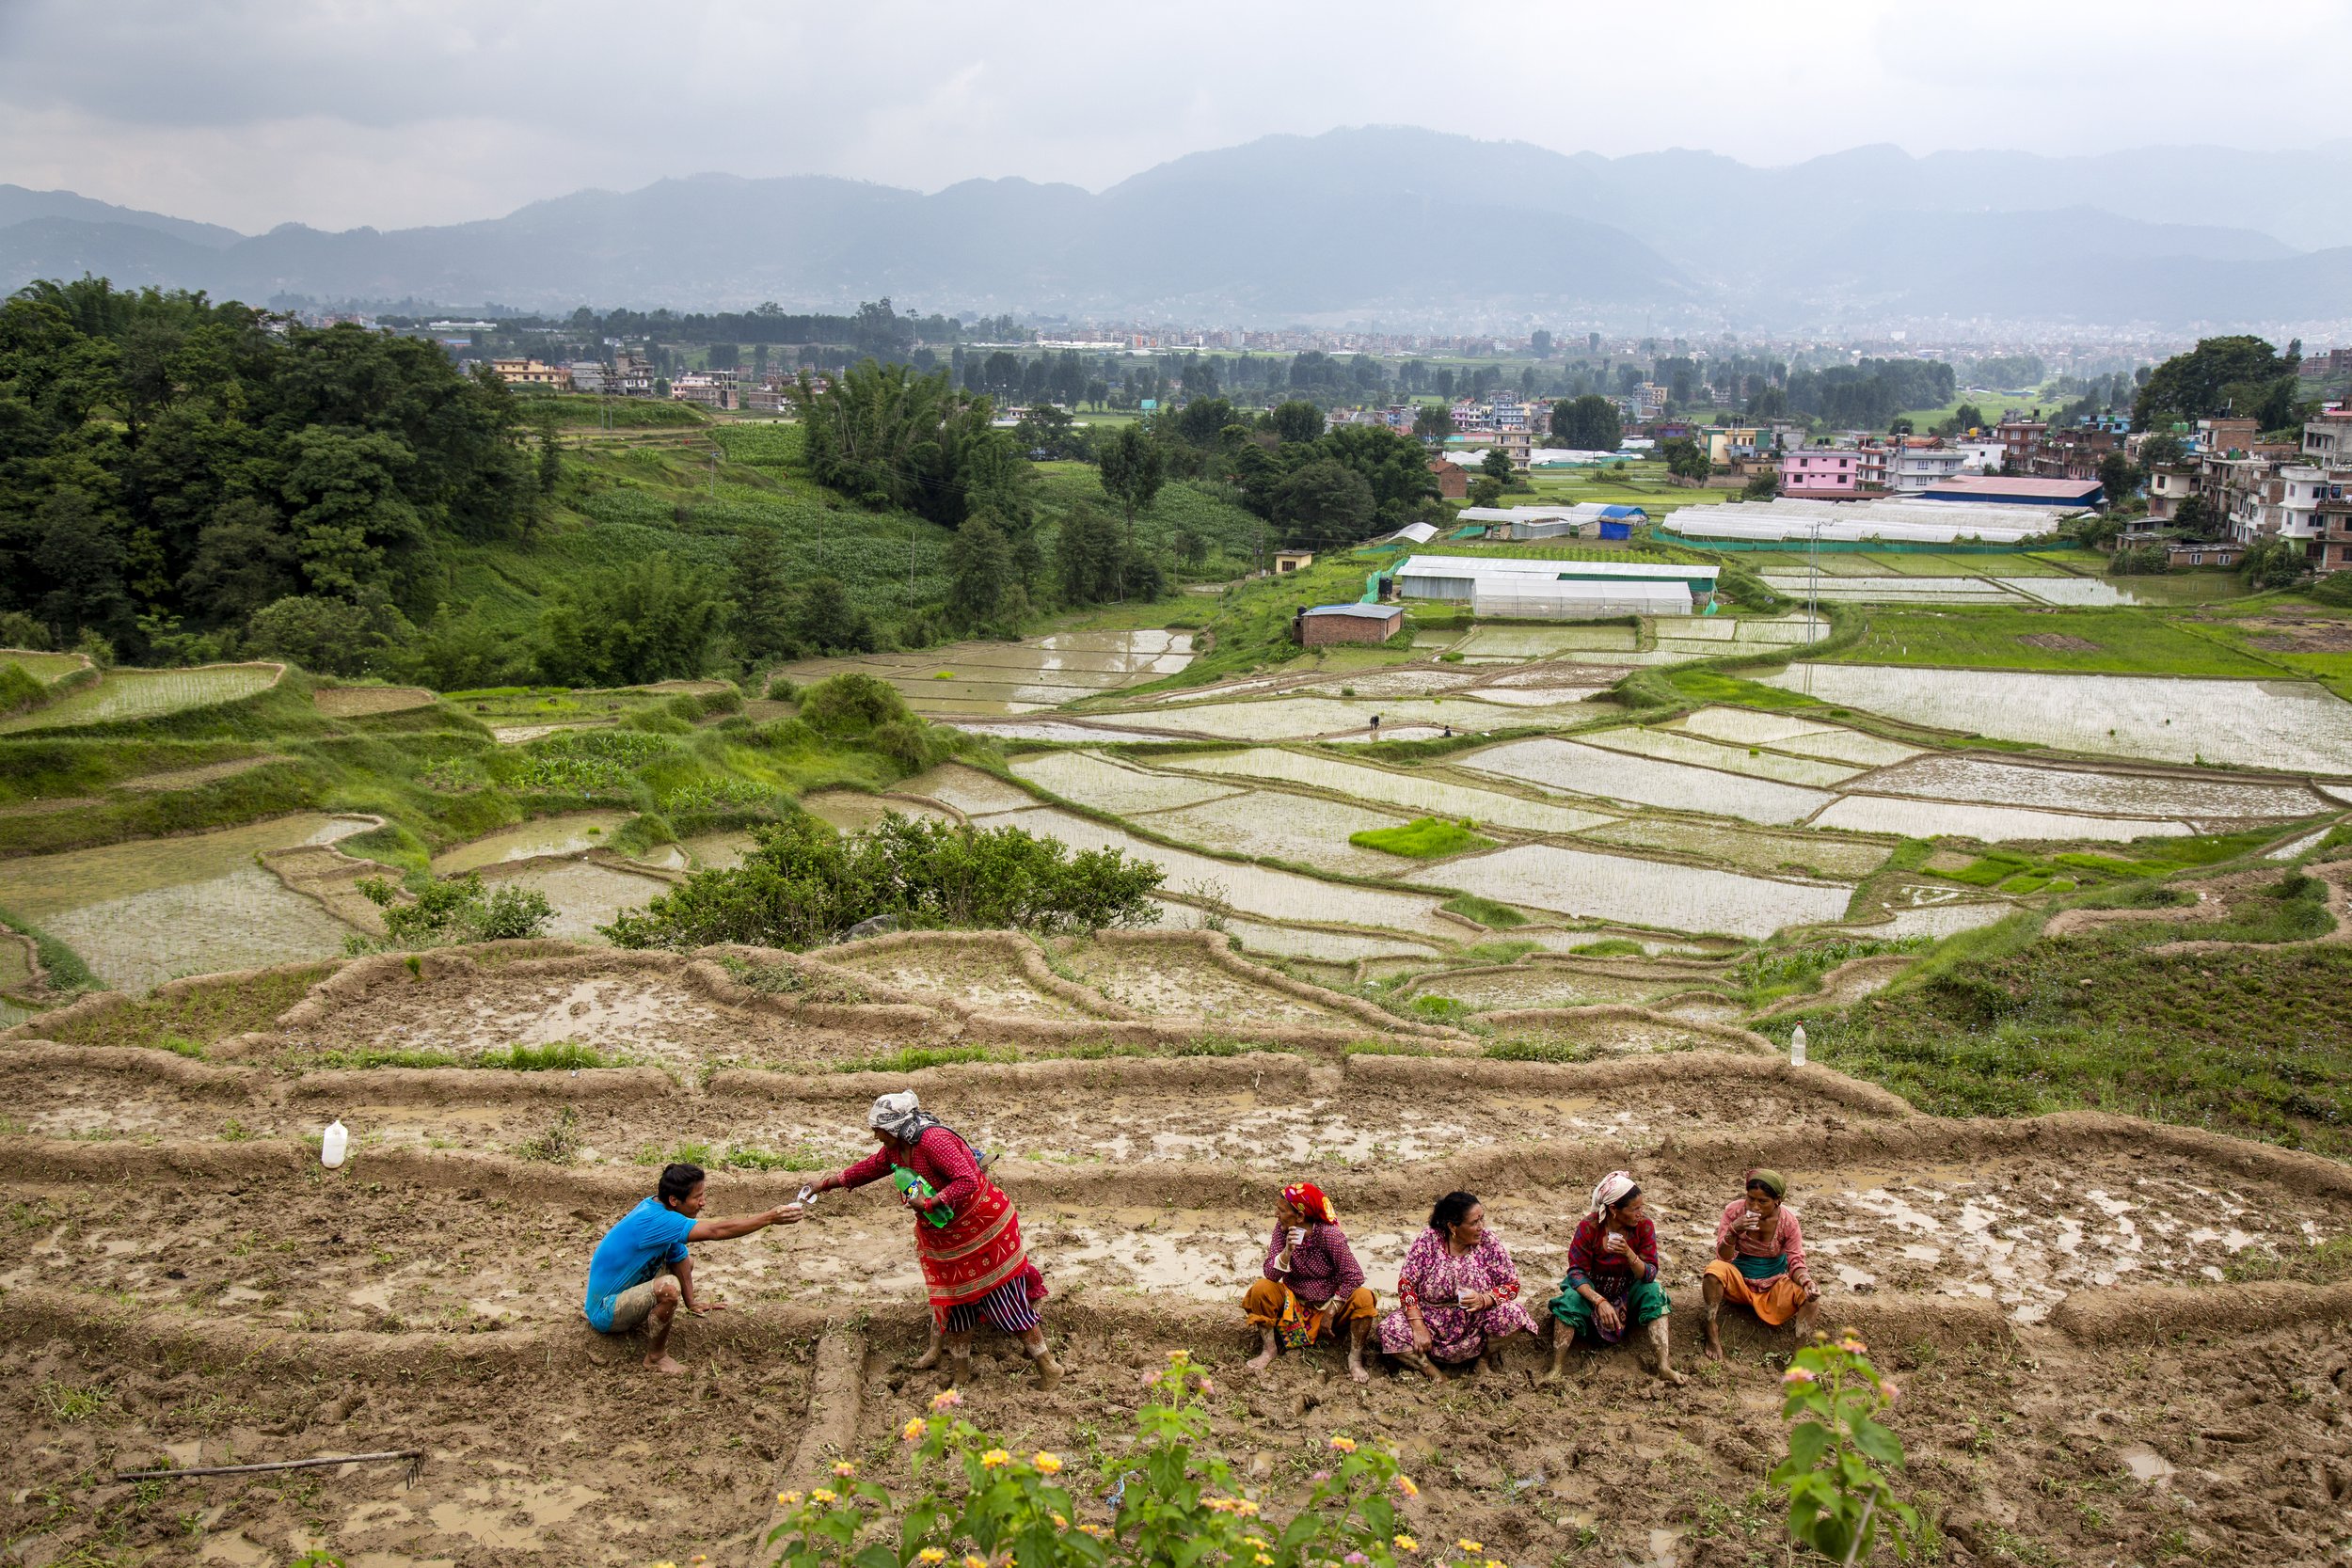  Rural folks working in rice fields in Changu Narayan, near Bhaktapur, Nepal on June 25, 2022. 